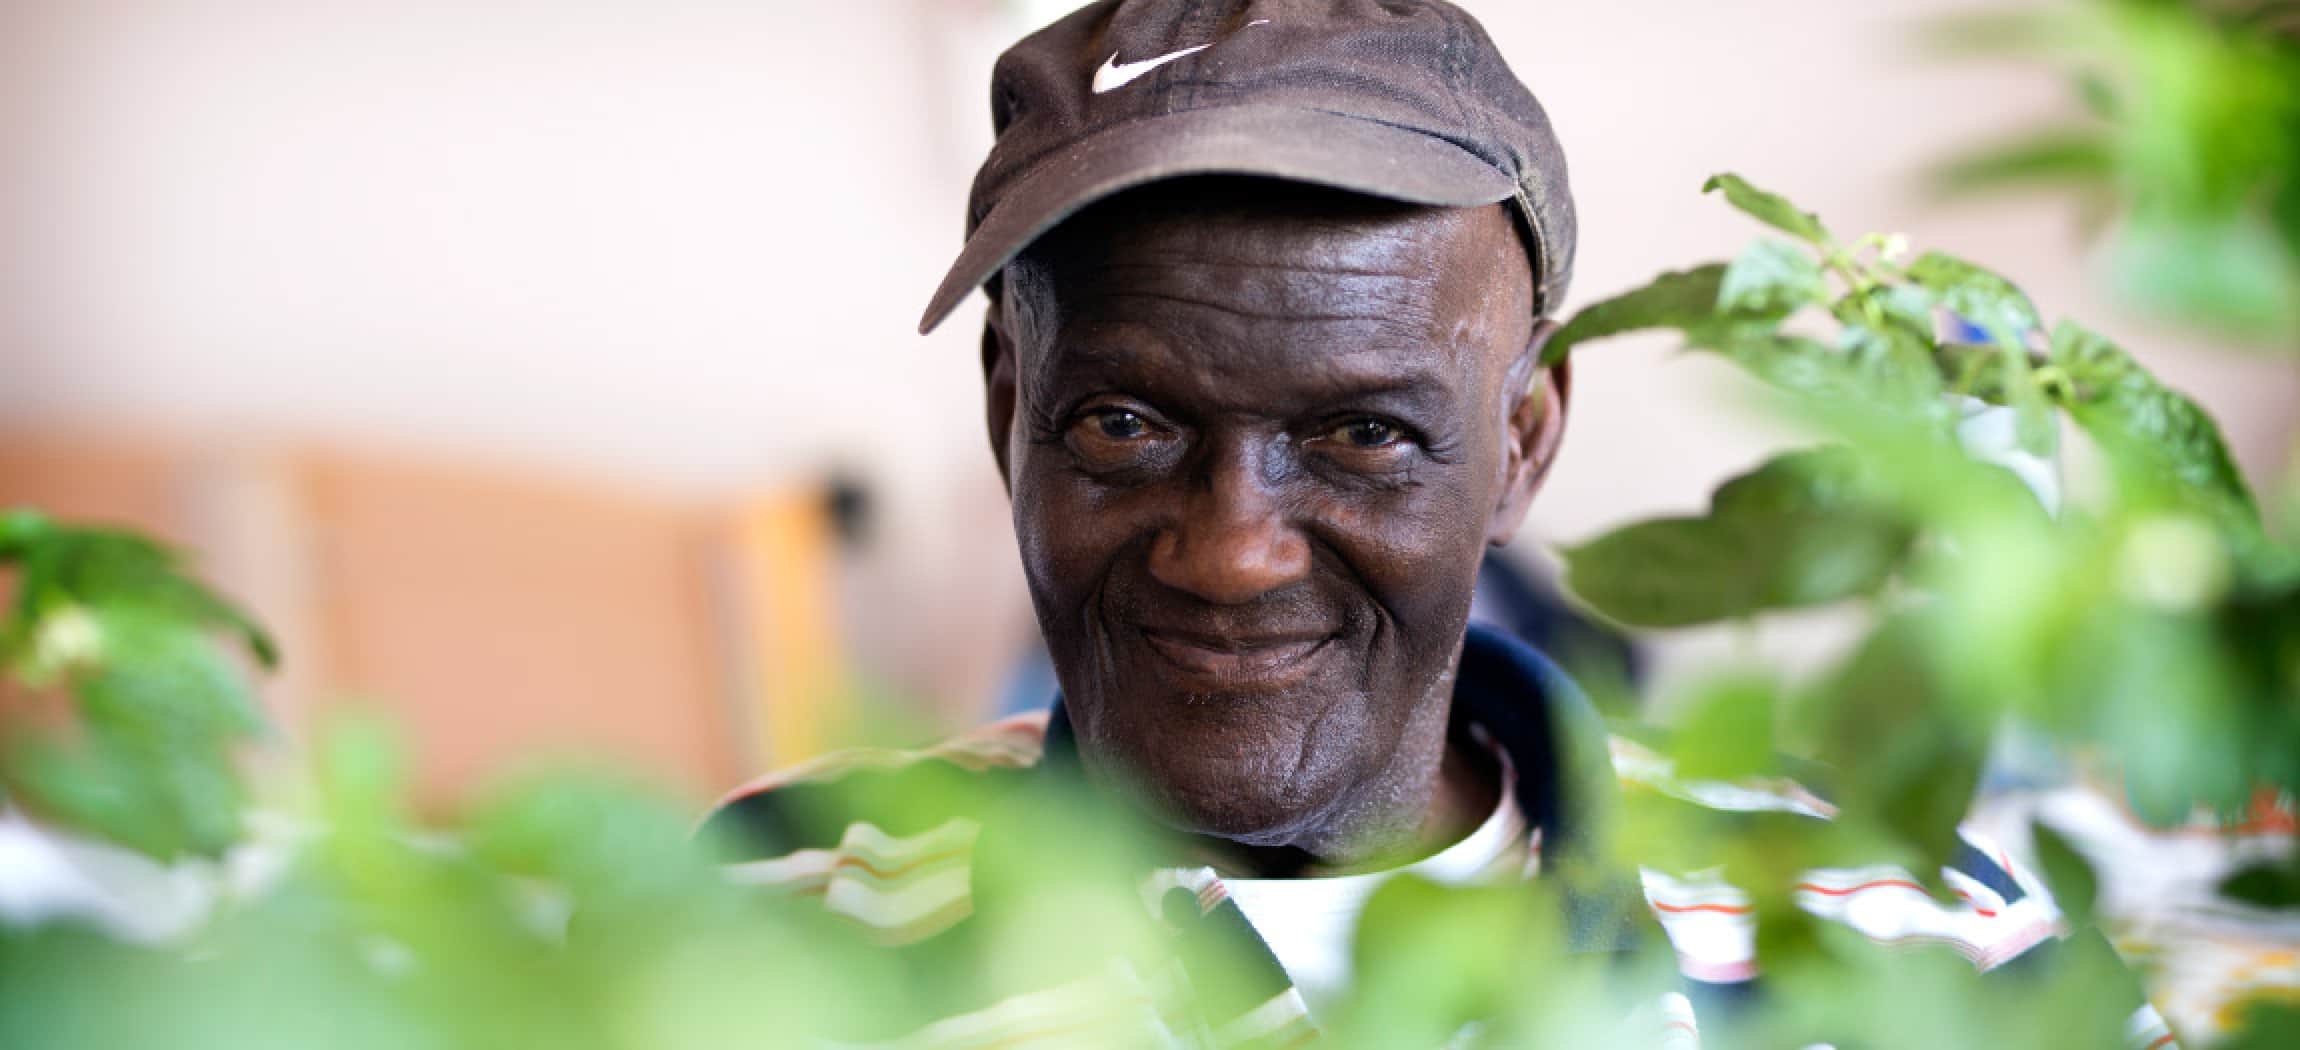 Vrolijke oudere man met donkere huidskleur en groene kamerplanten